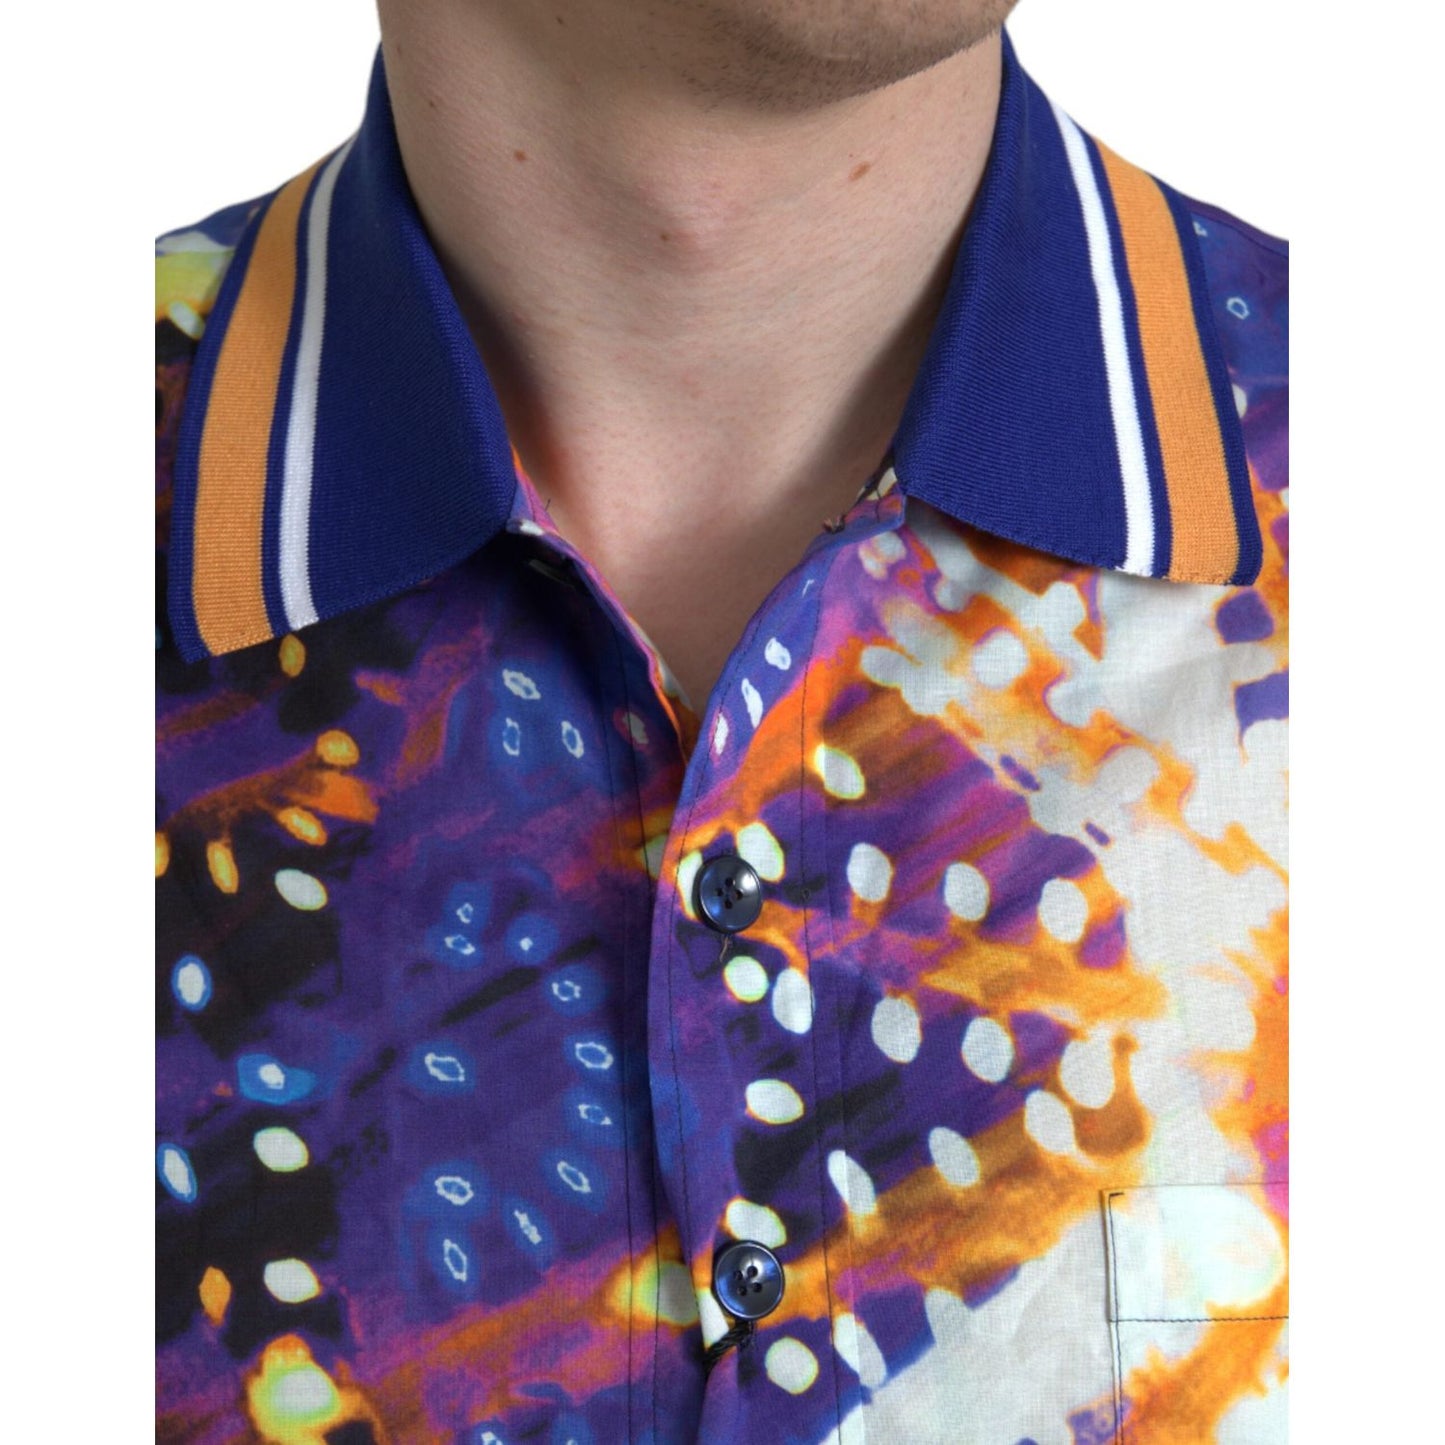 Dolce & Gabbana Multicolor Luminarie Print Cotton Casual Shirt multicolor-luminarie-print-cotton-casual-shirt